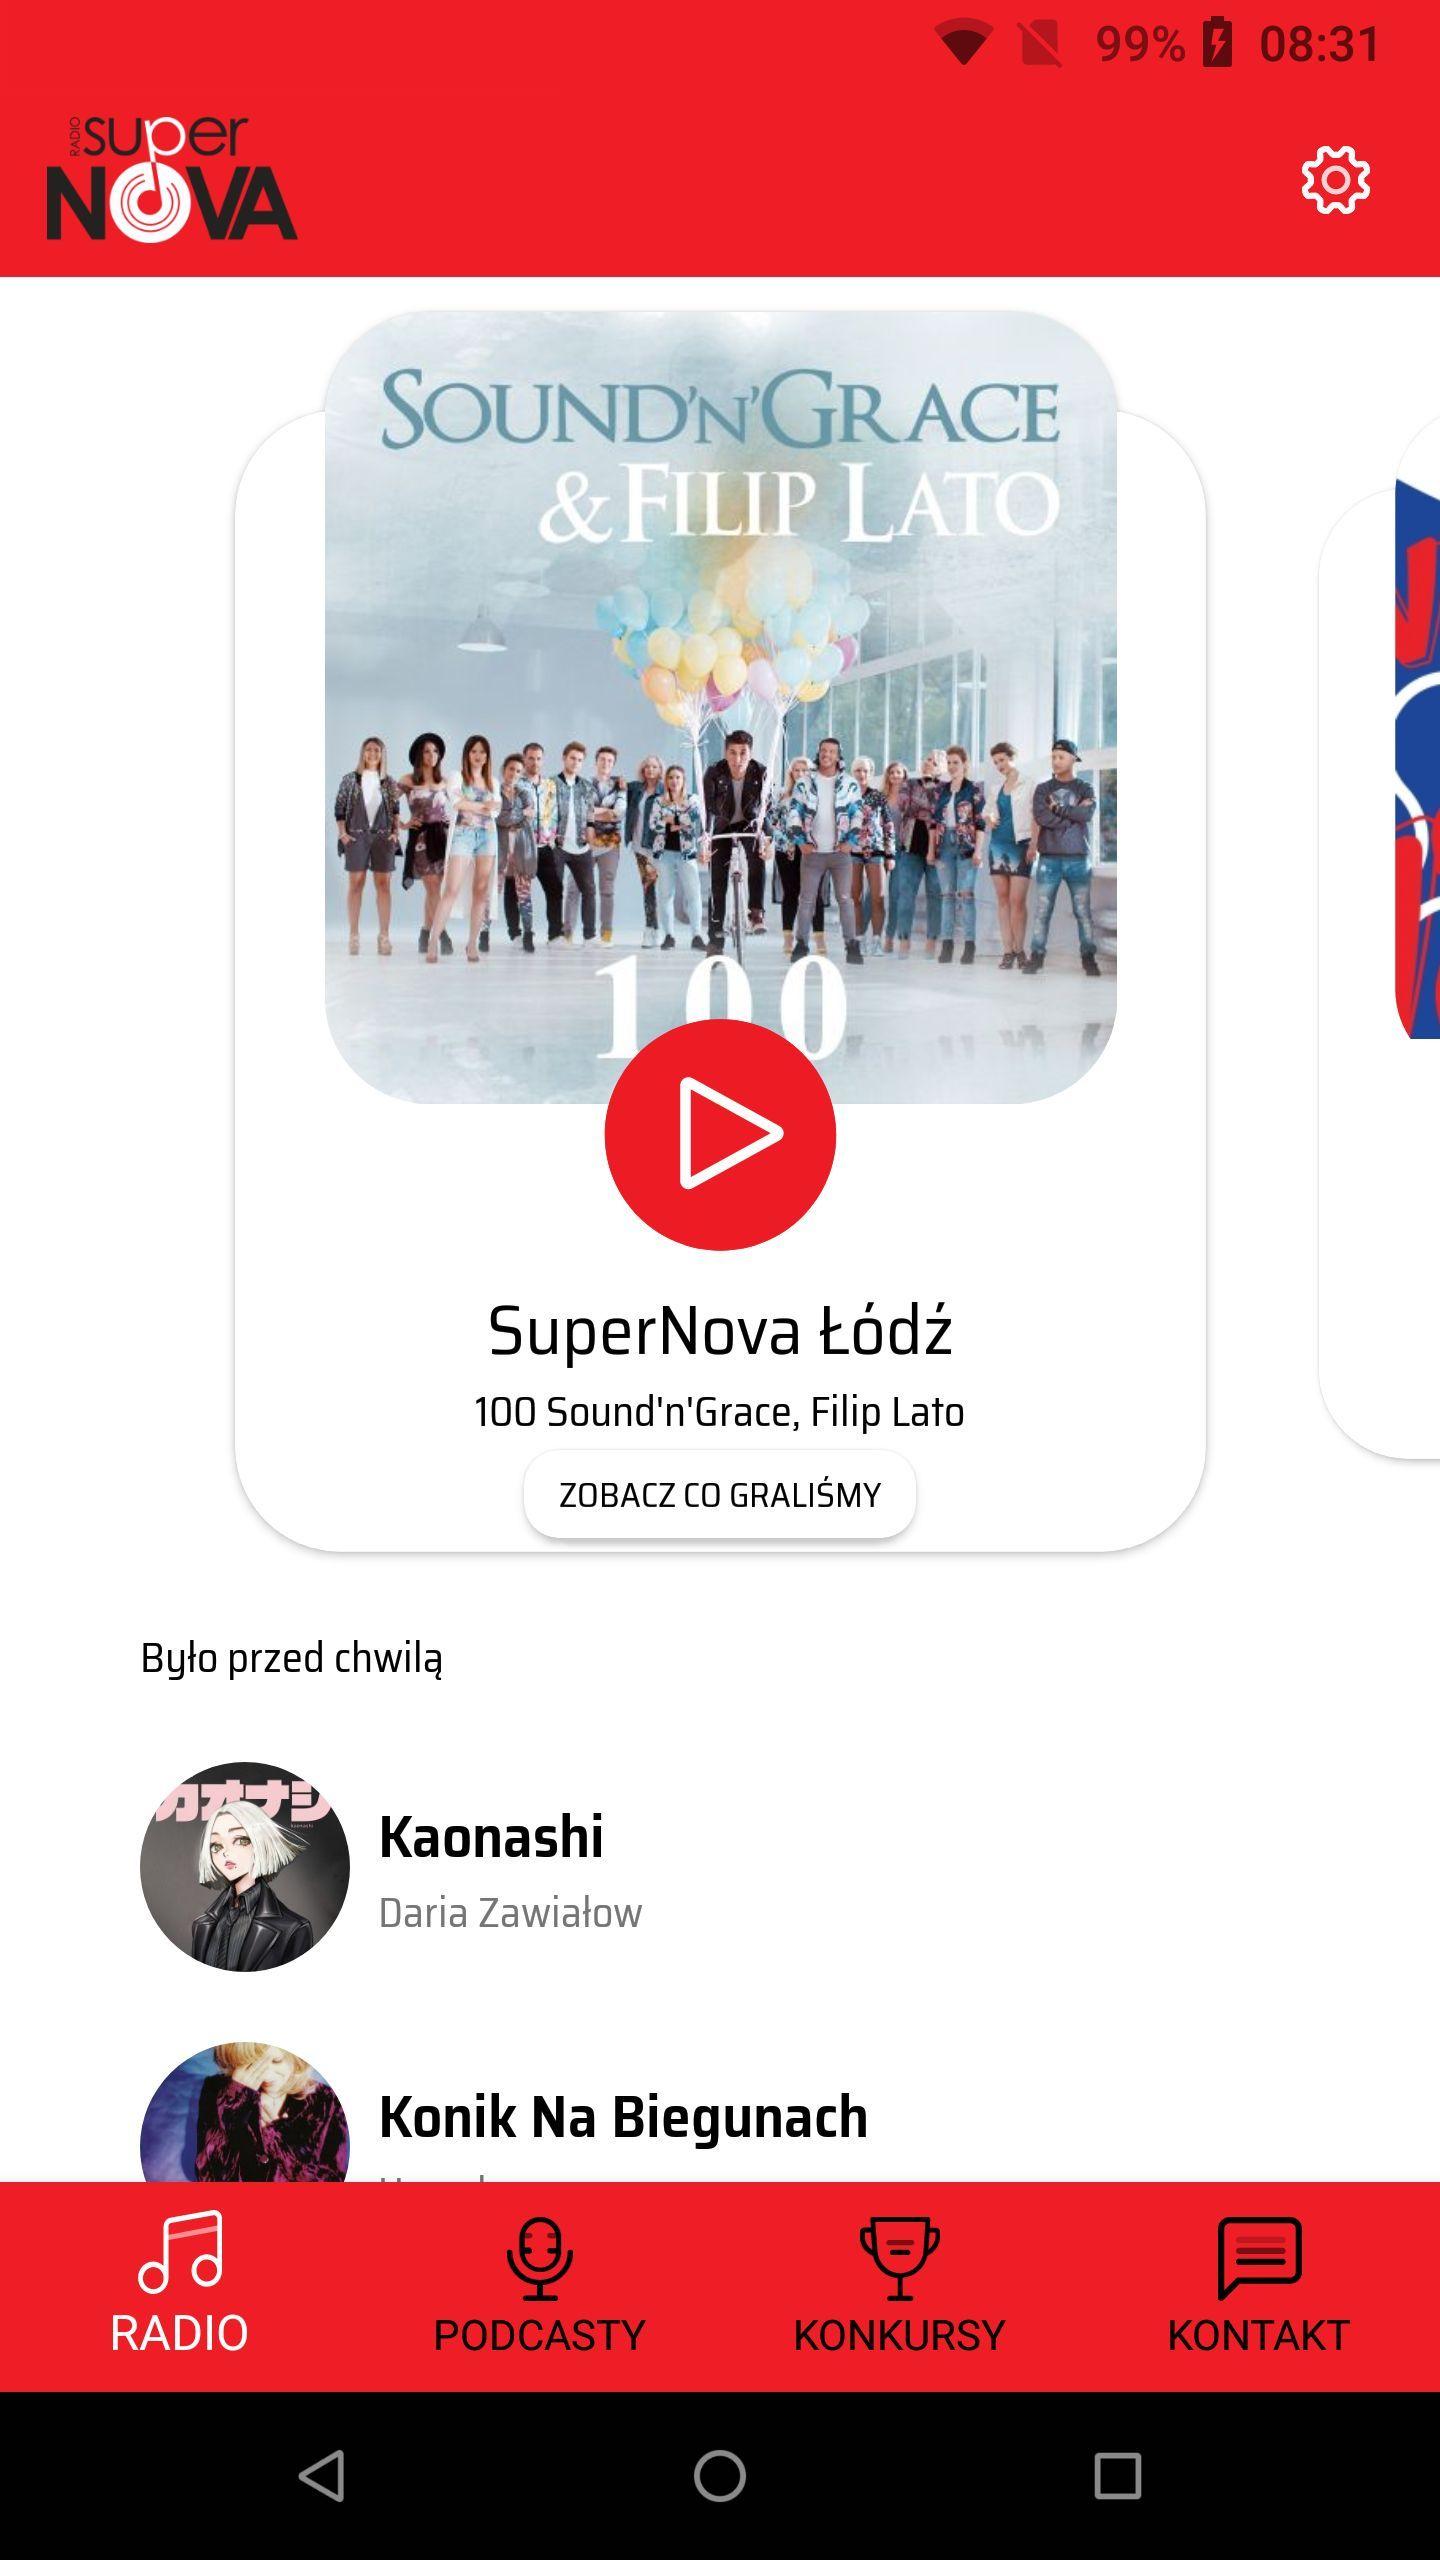 Radio SuperNova – słuchaj online! for Android - APK Download